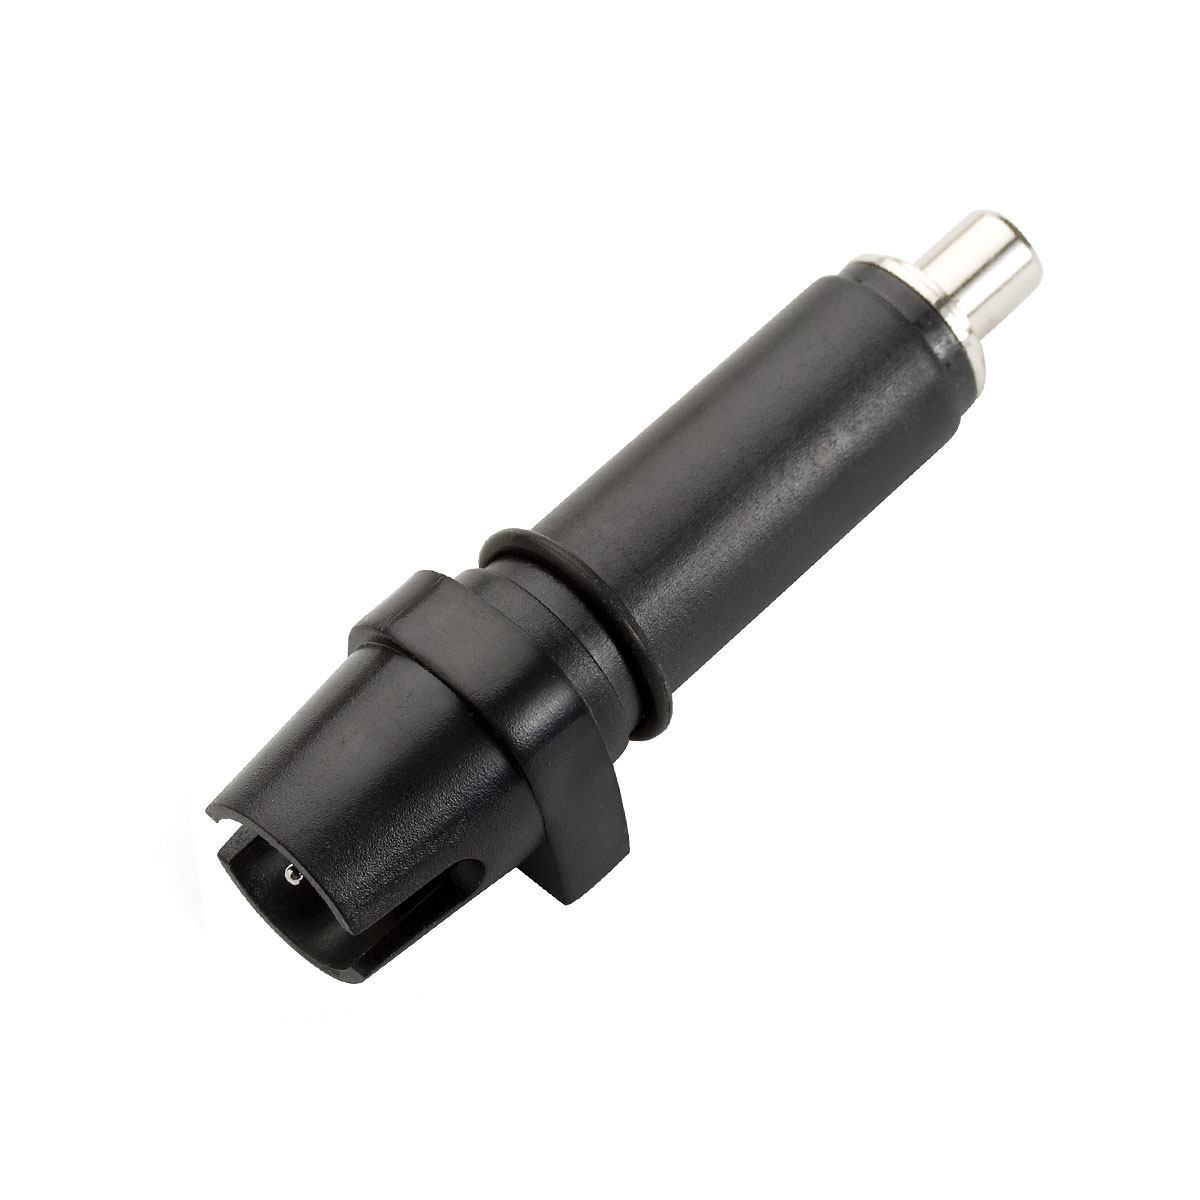 HI73120 Spare Electrode for Testers